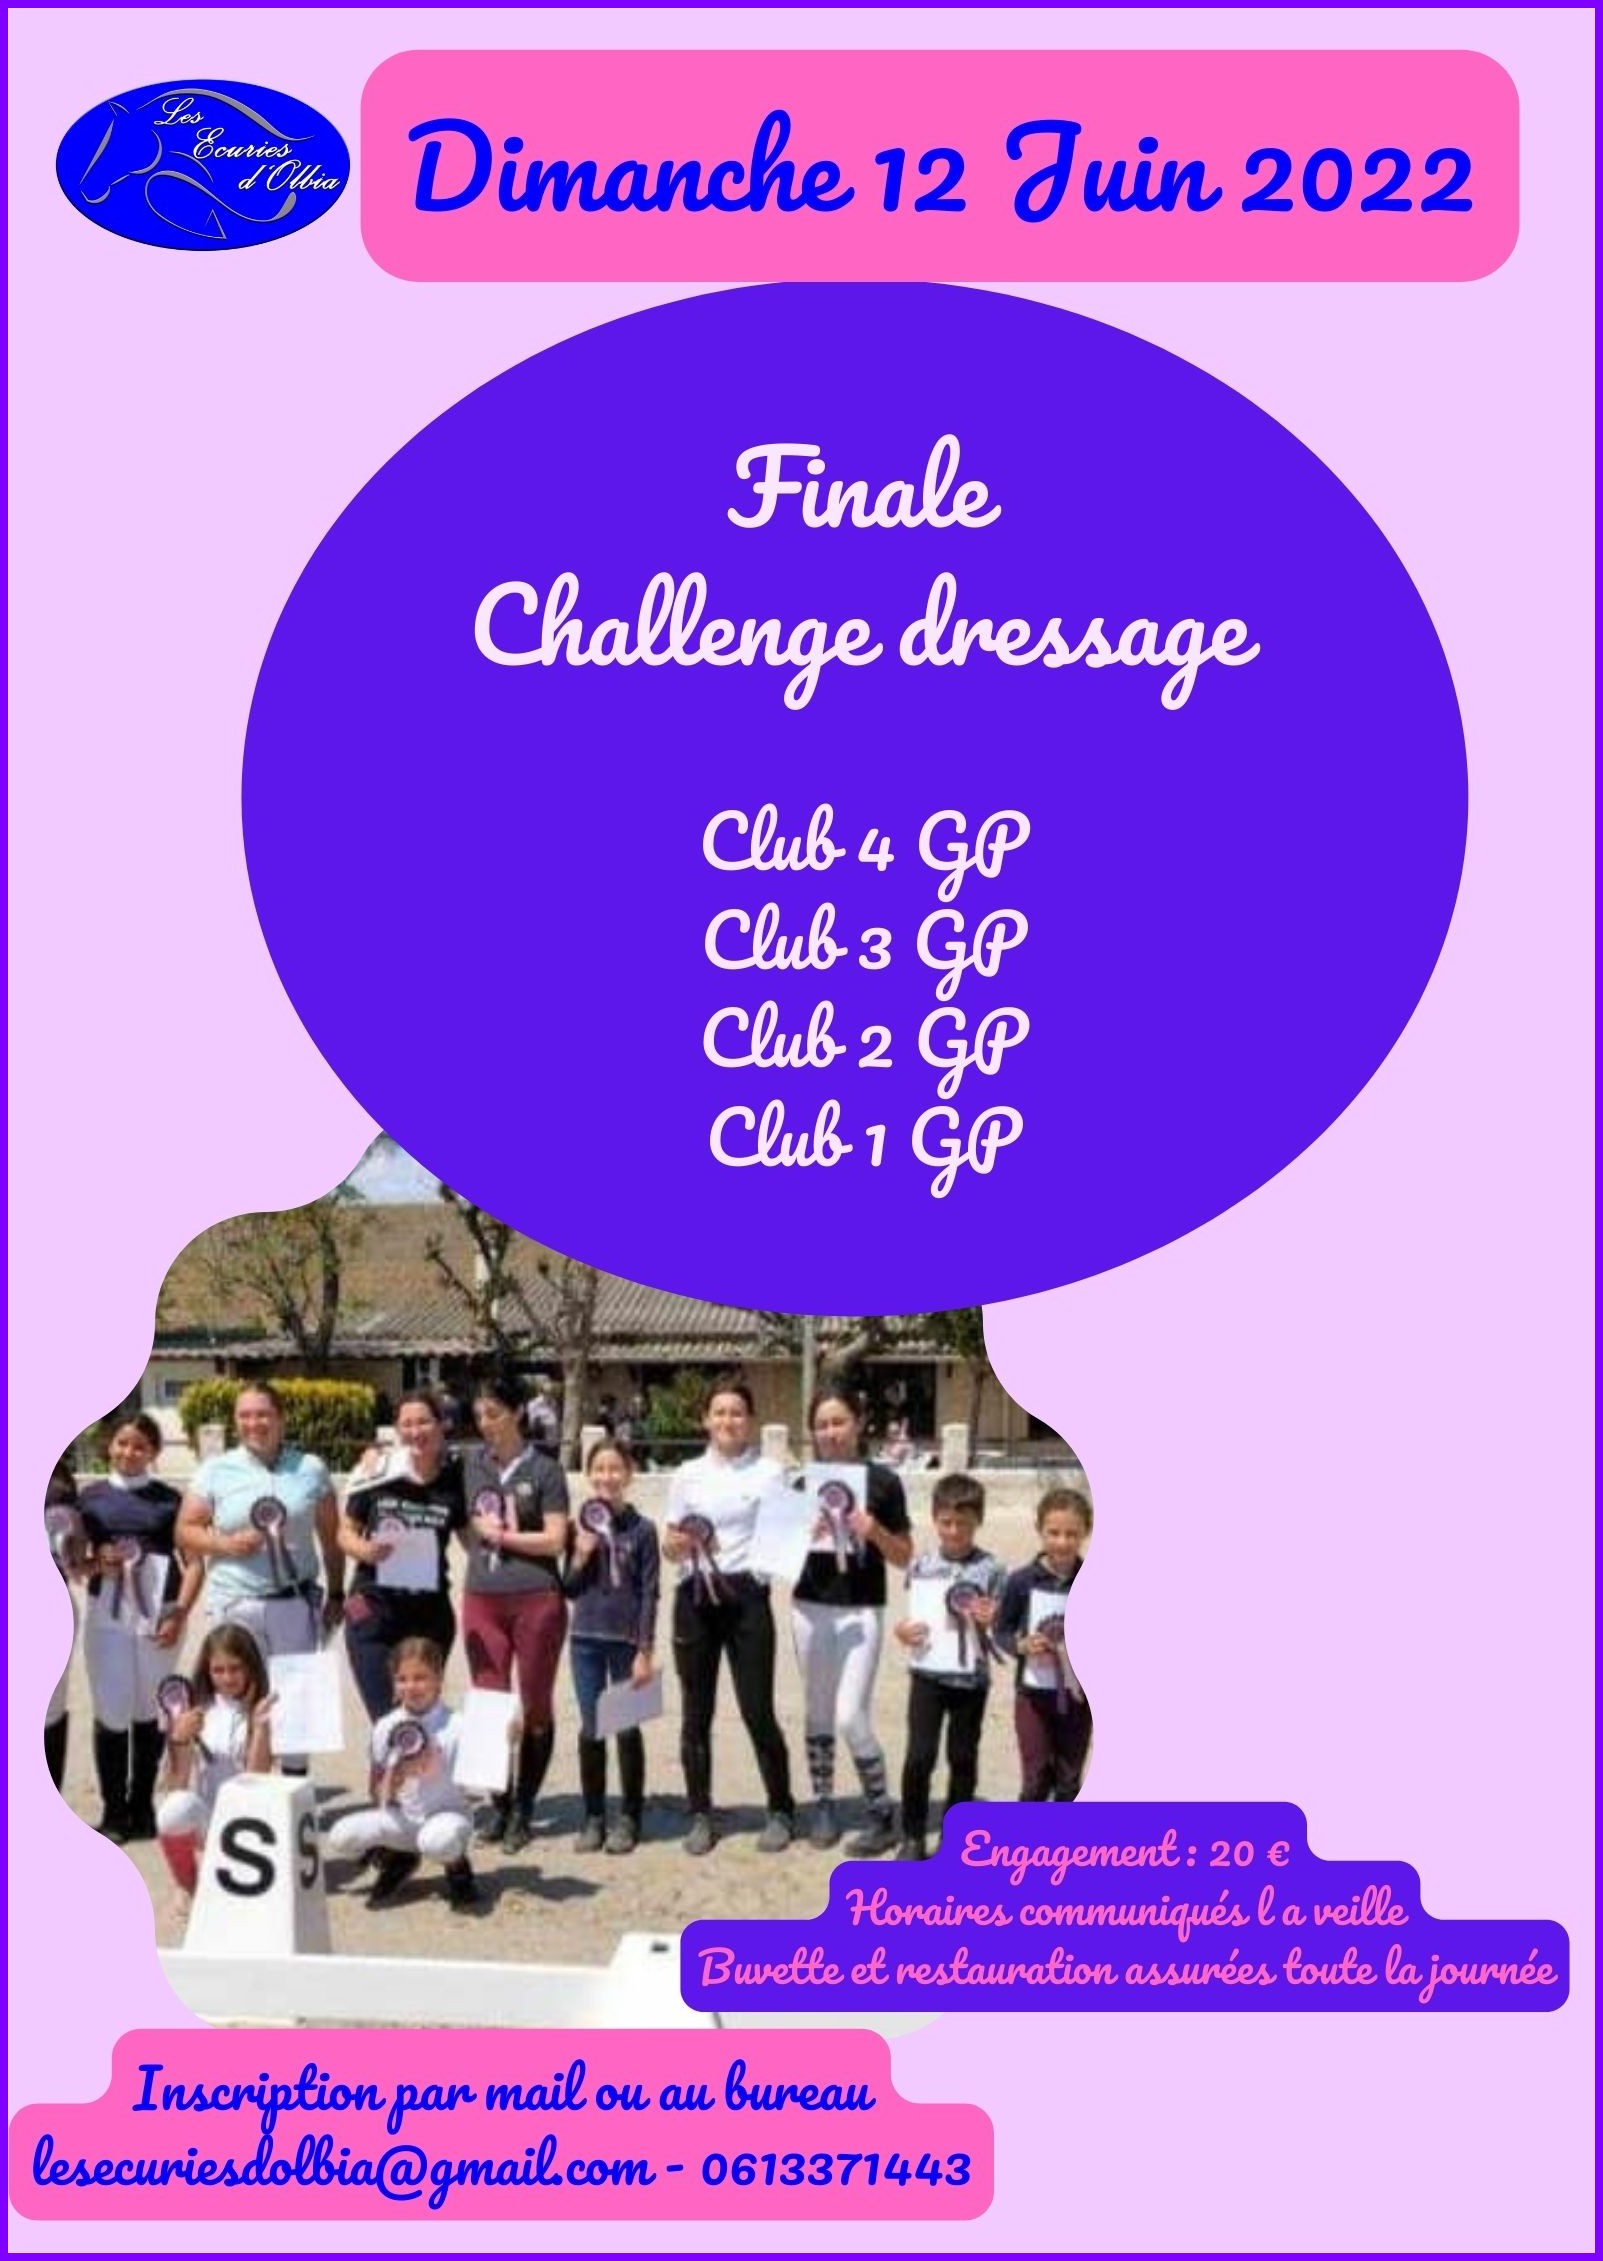 Finale challenge dressage